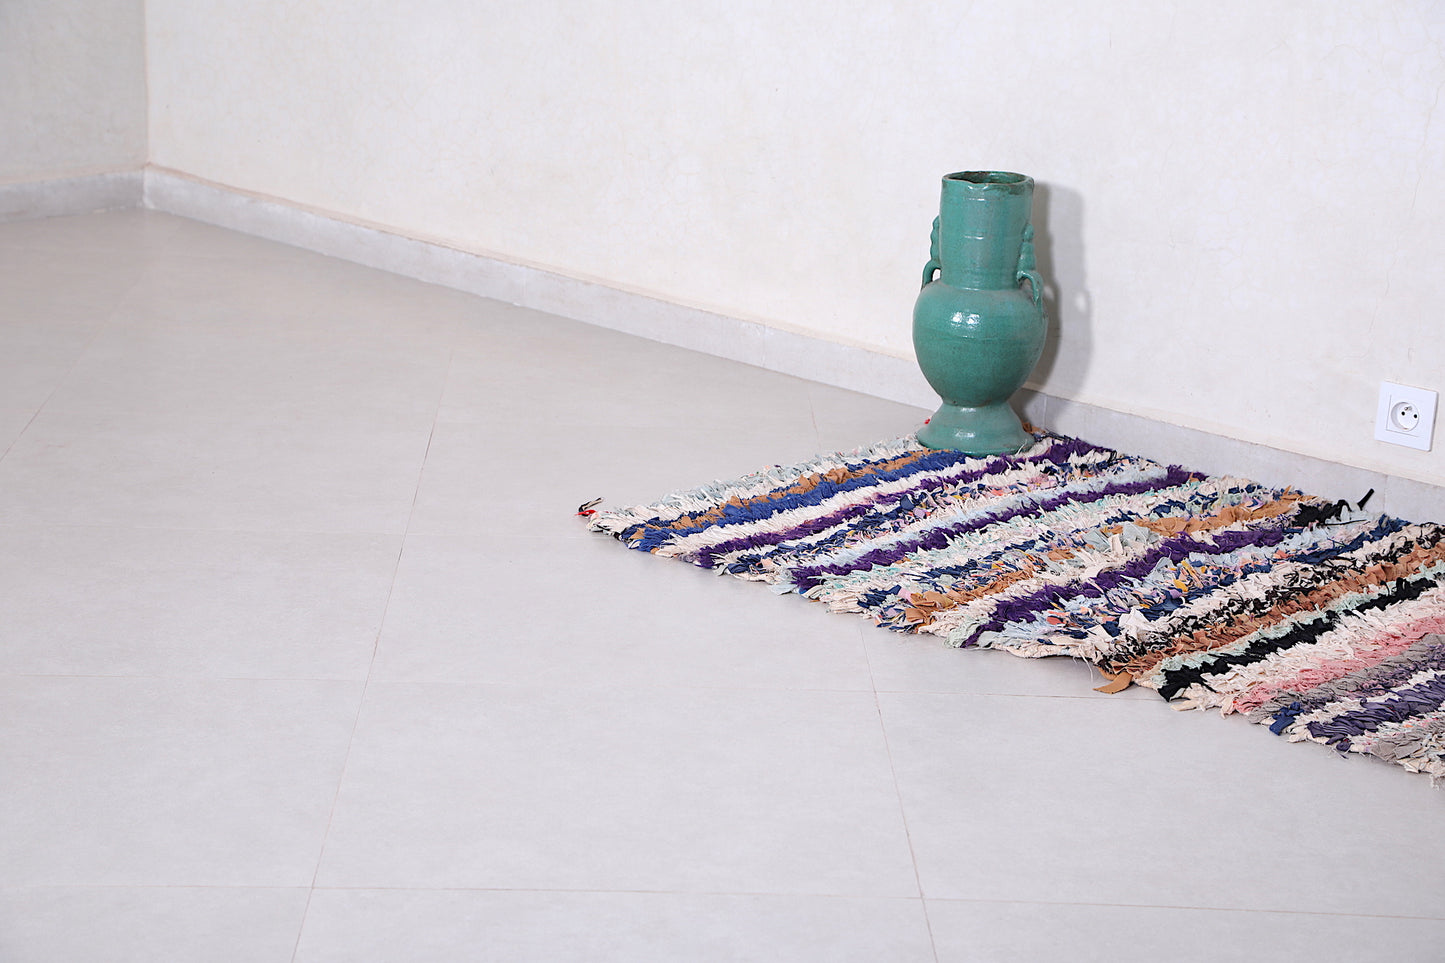 Colorful Moroccan Berber rug  2.6 X 5.6 Feet